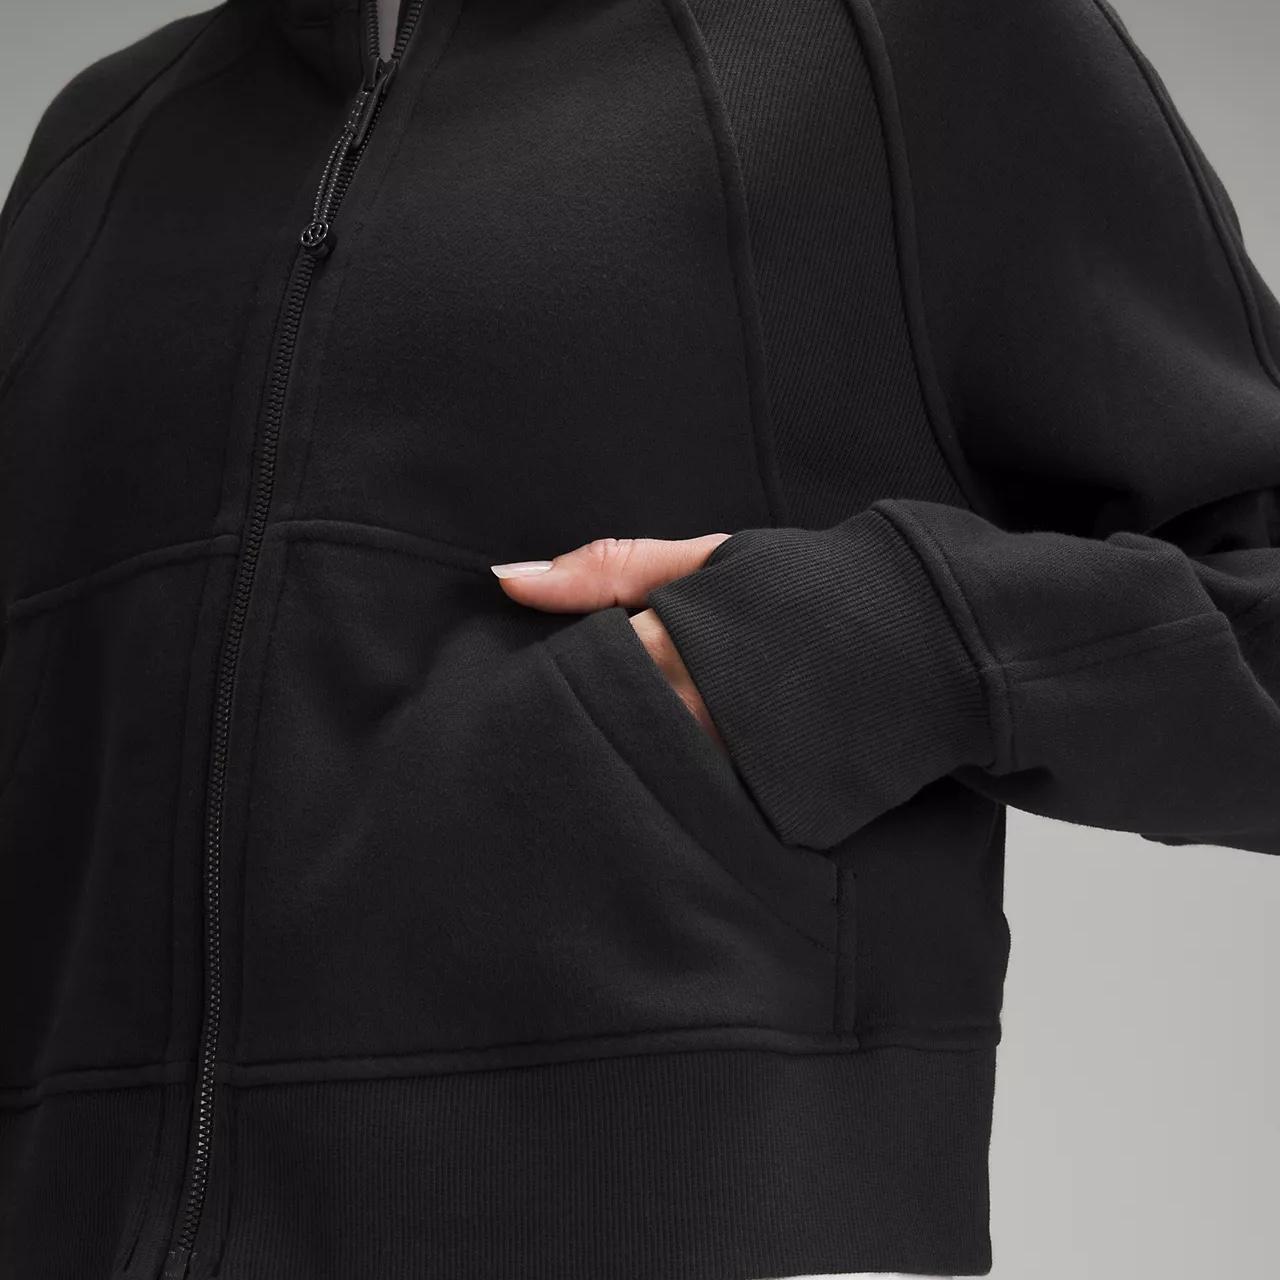 💕NWT Lululemon scuba oversized full zip hoodie black. XS/S Sold